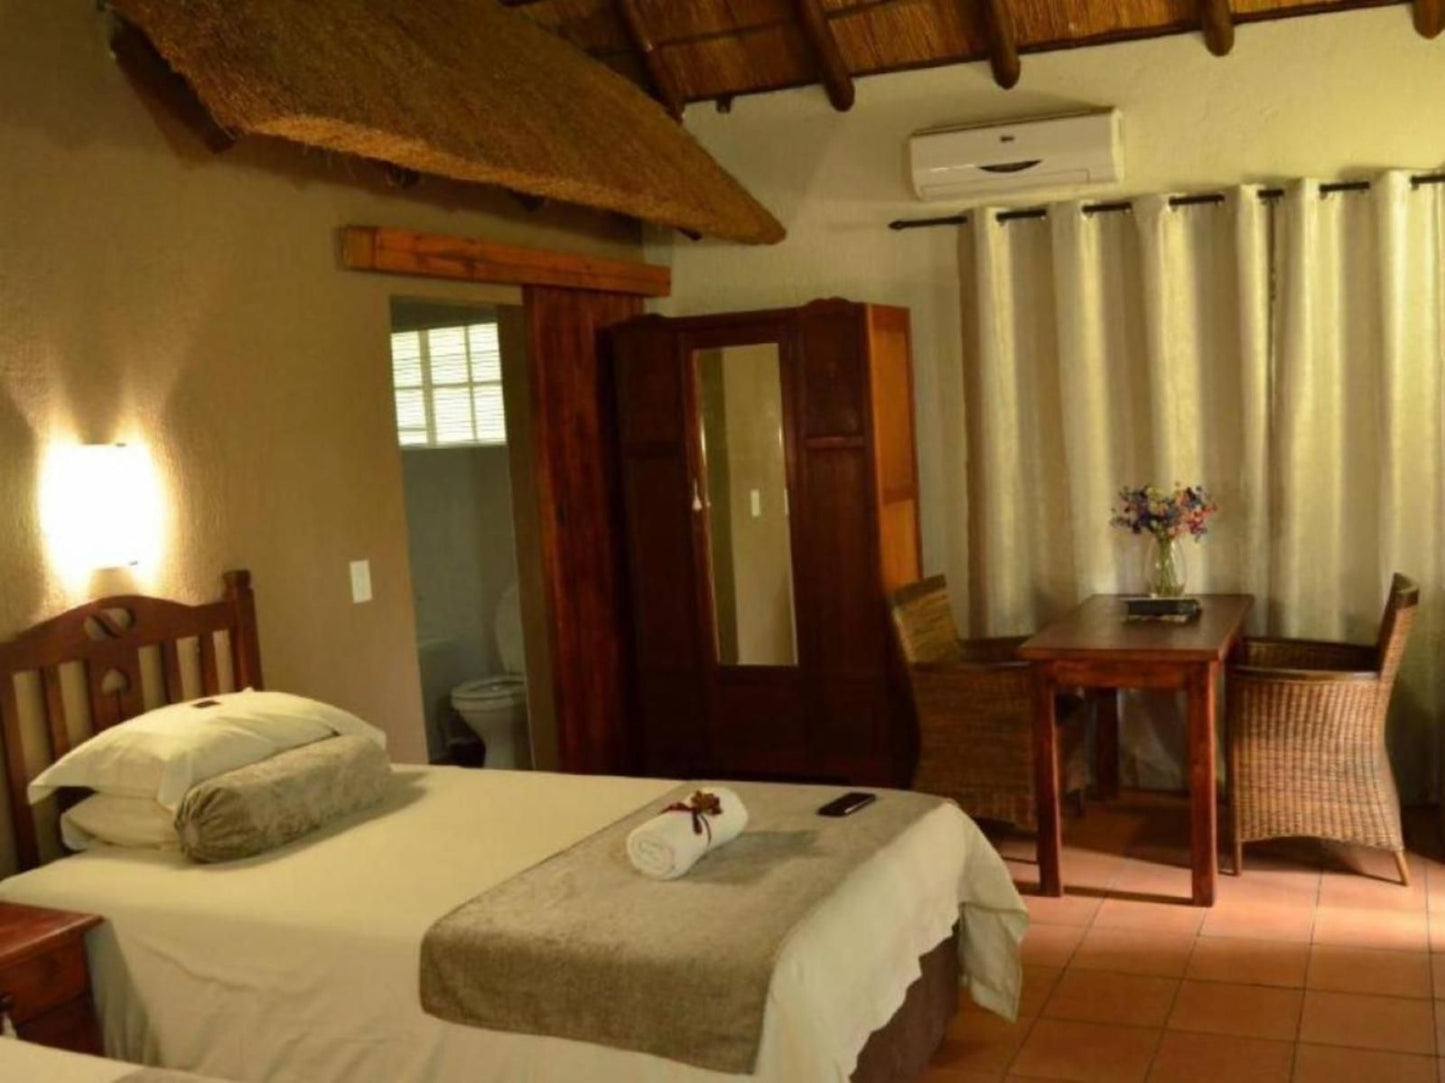 Acasia Guest Lodge Komatipoort Mpumalanga South Africa Sepia Tones, Bedroom